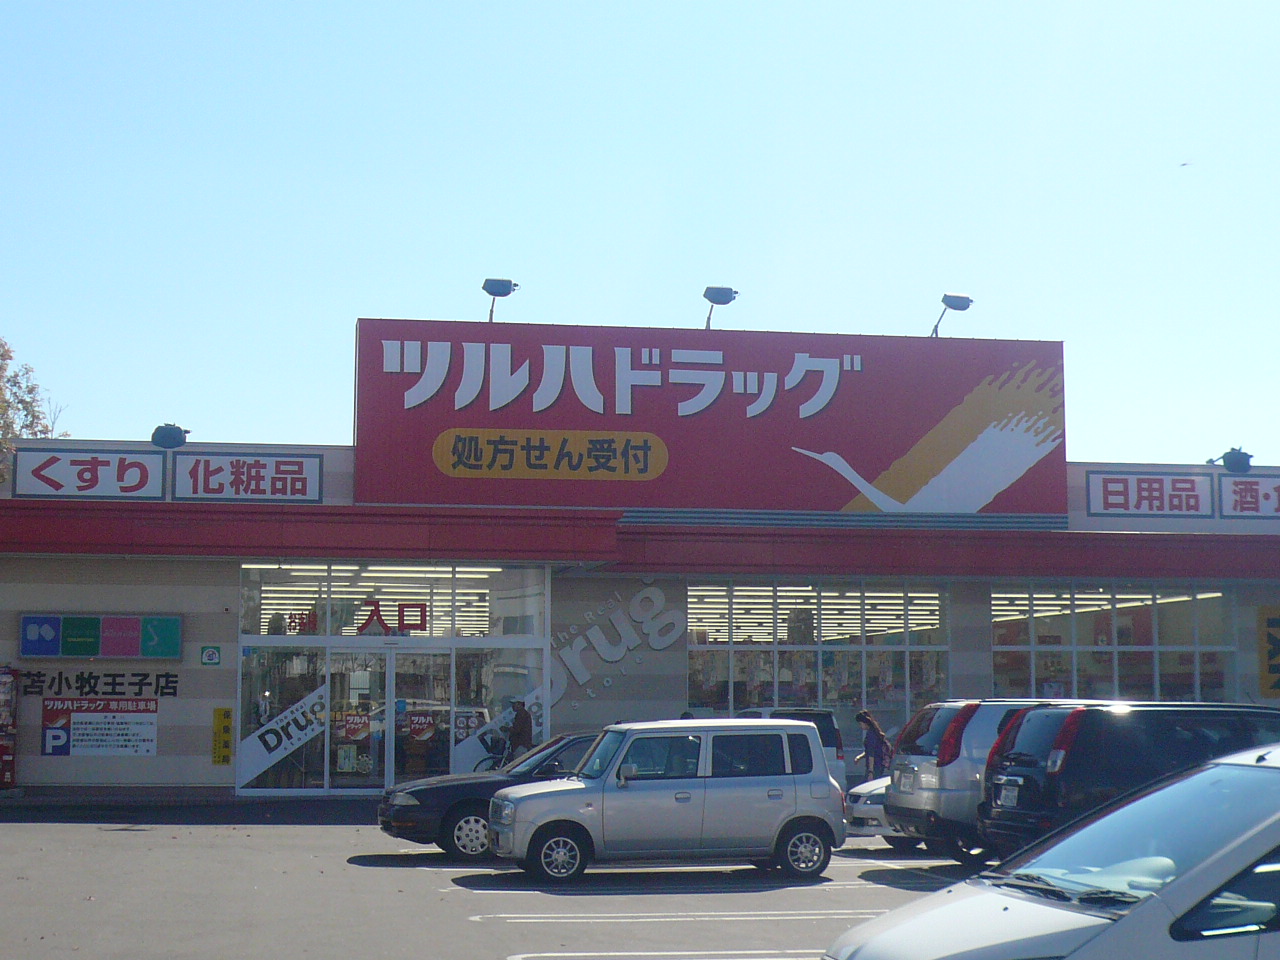 Dorakkusutoa. Tsuruha drag Tomakomai Prince shop 1070m until (drugstore)